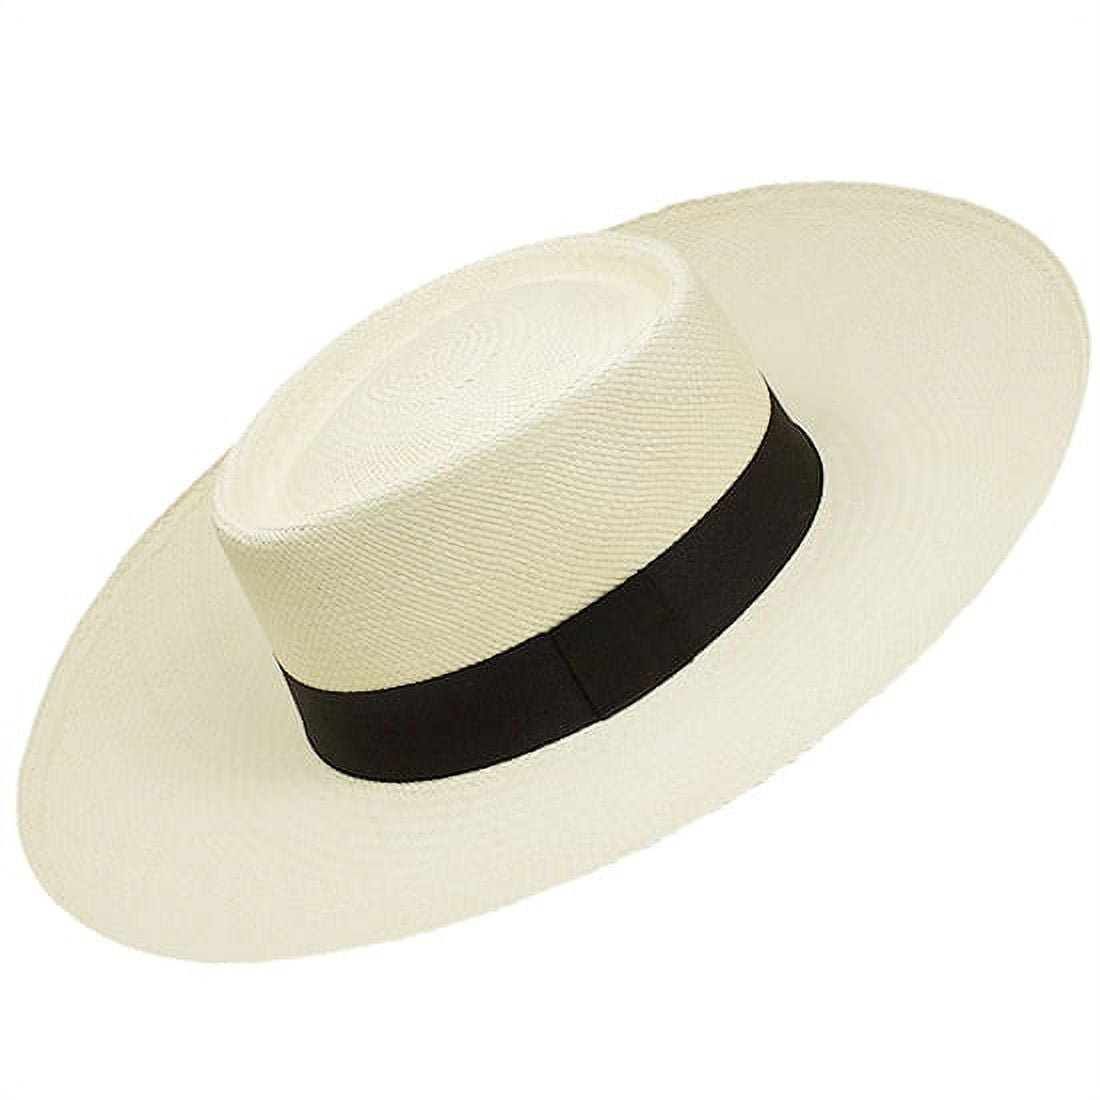 Gamboa Original Panama Hat for Men and Women Gambler Wide Brim Straw Hat  for Summer and Vacation